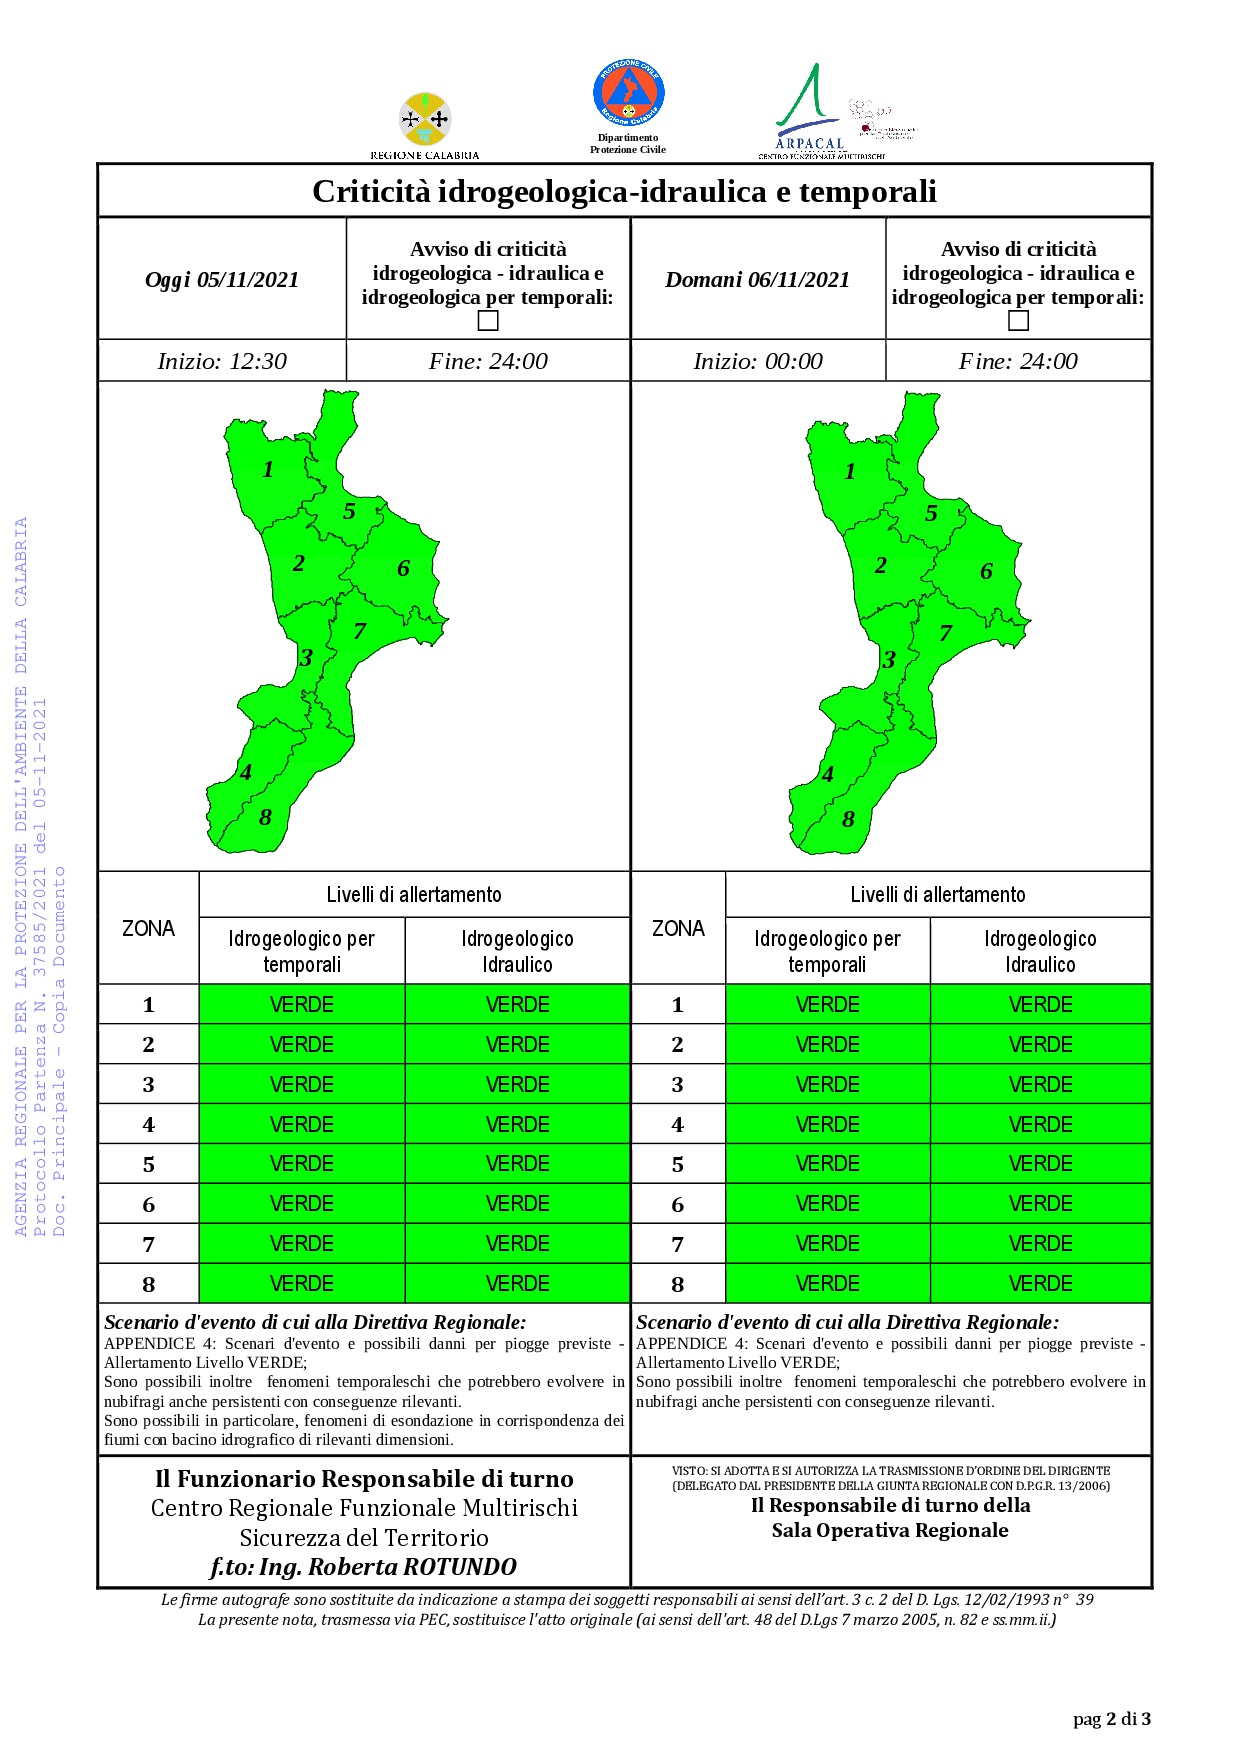 Criticità idrogeologica-idraulica e temporali in Calabria 05-11-2021